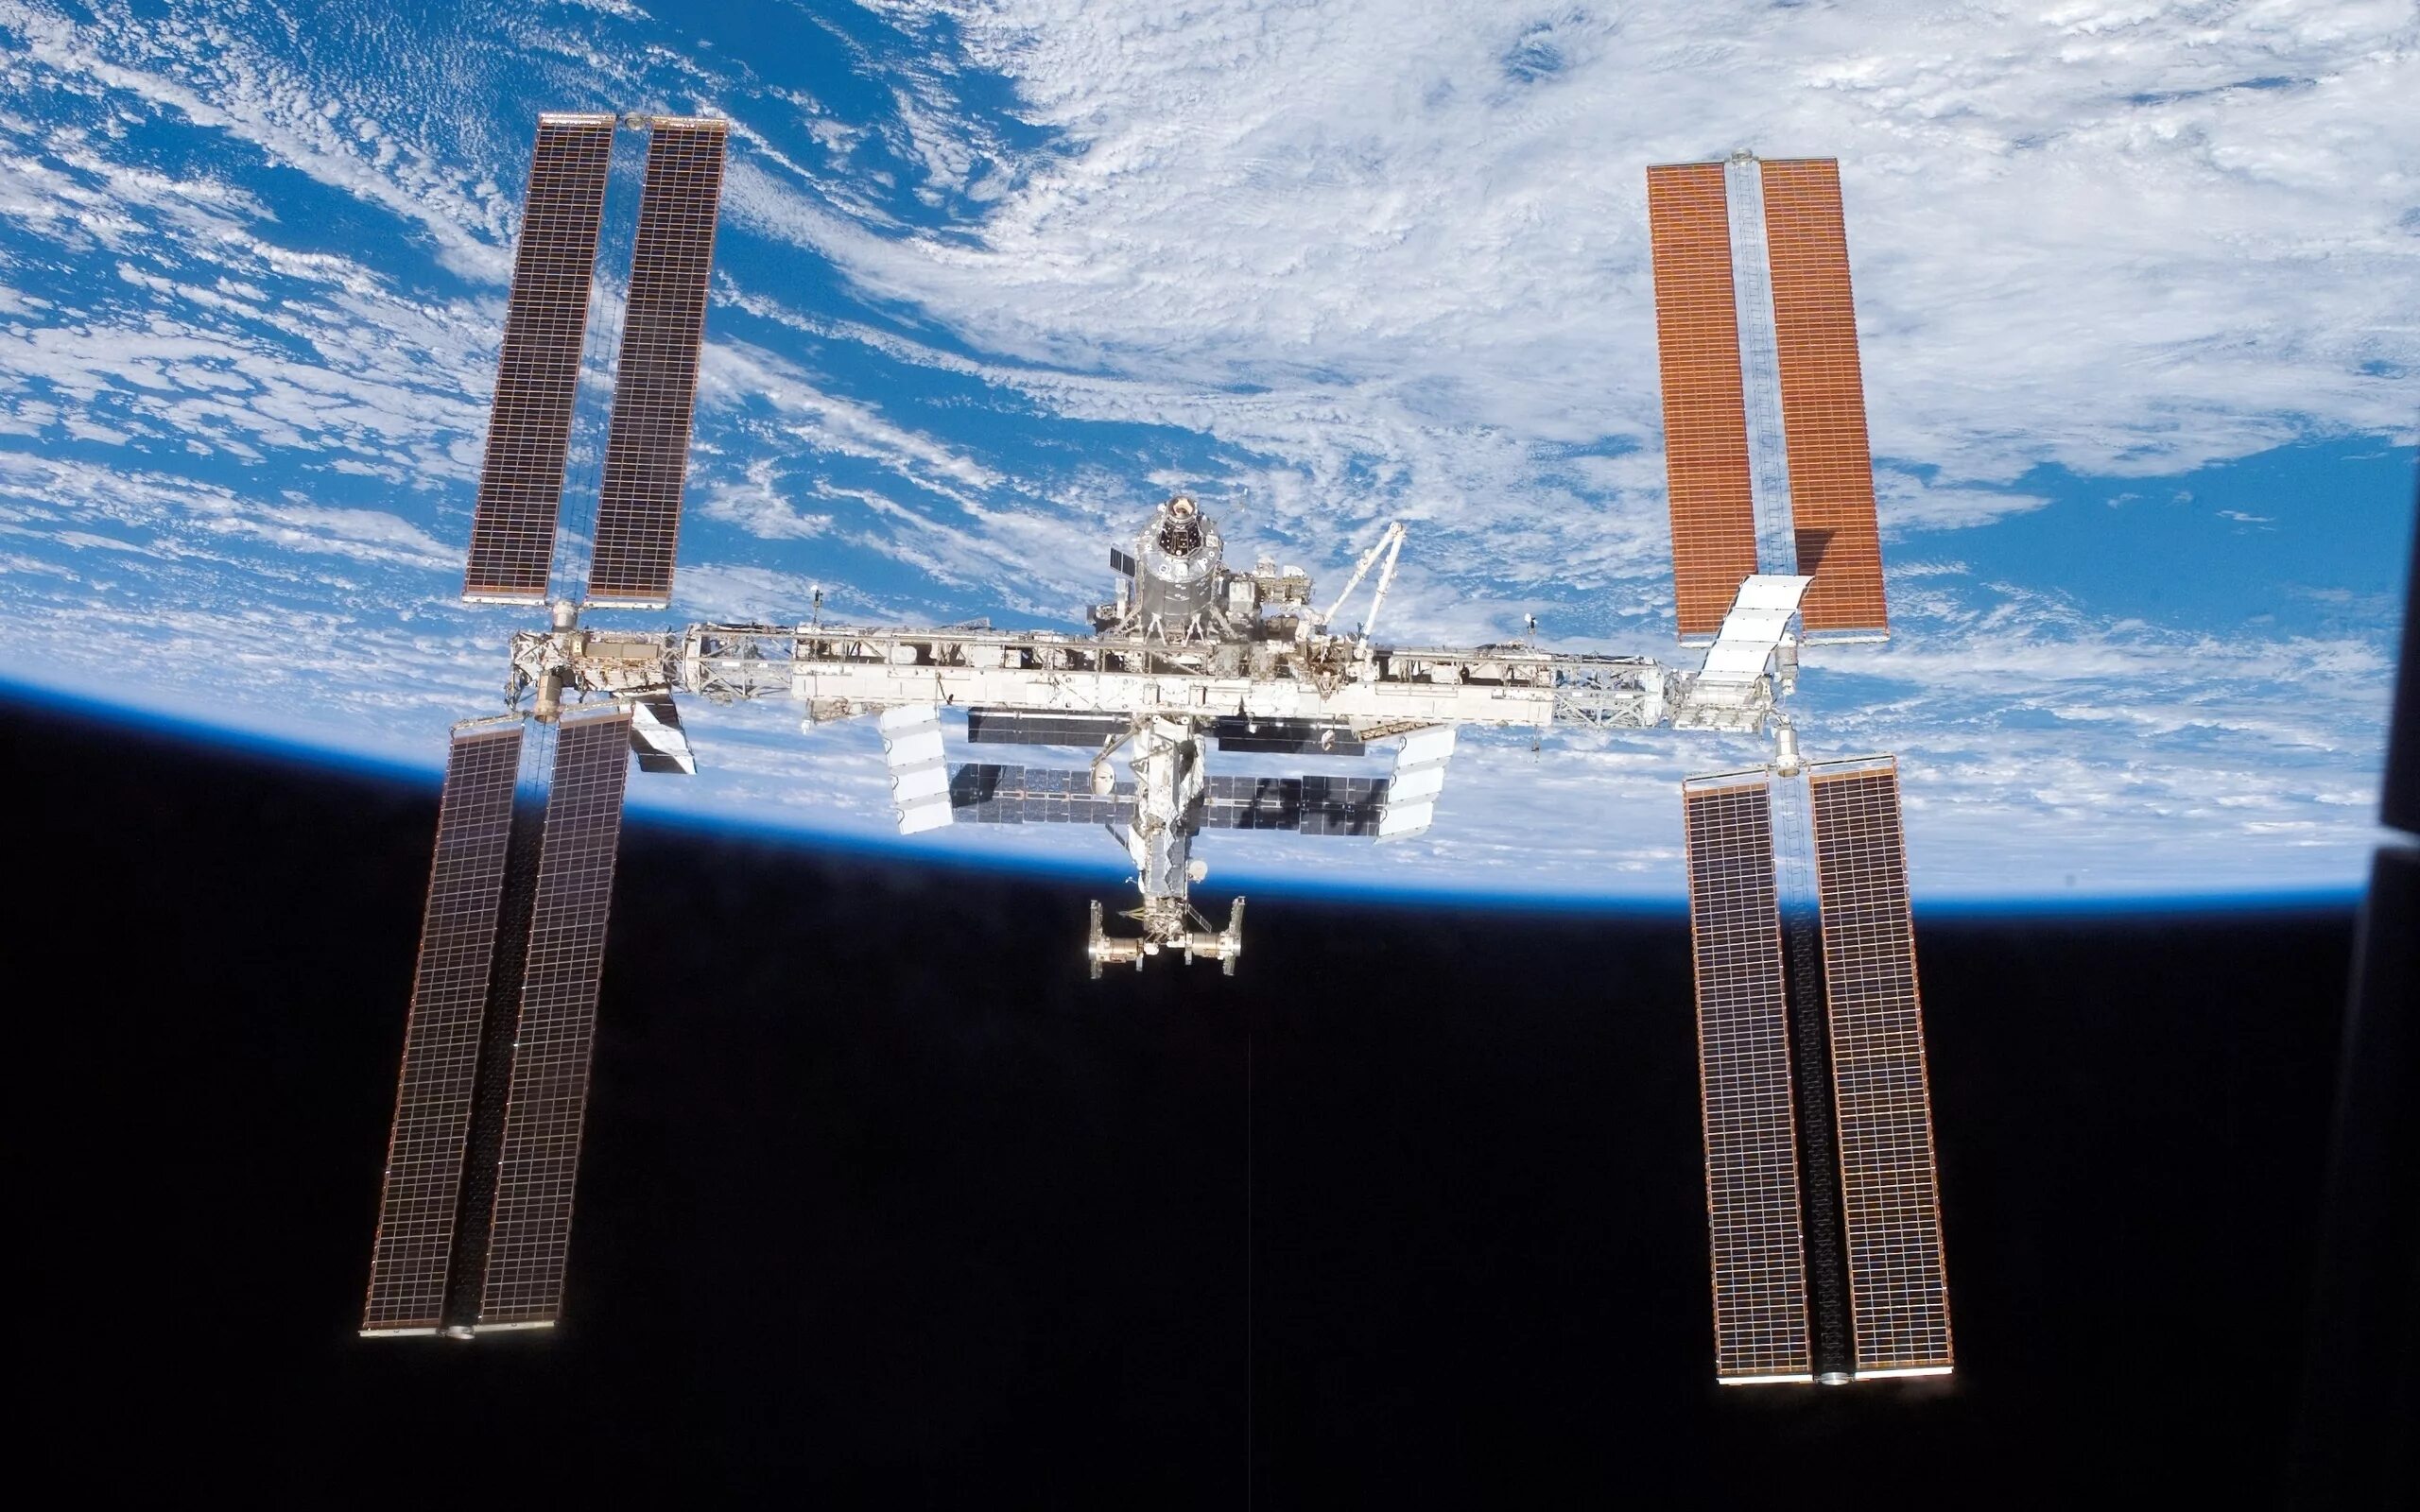 Международная Космическая станция МКС. ISS Космическая станция. Станция МКС В космосе. МКС 2007 год.